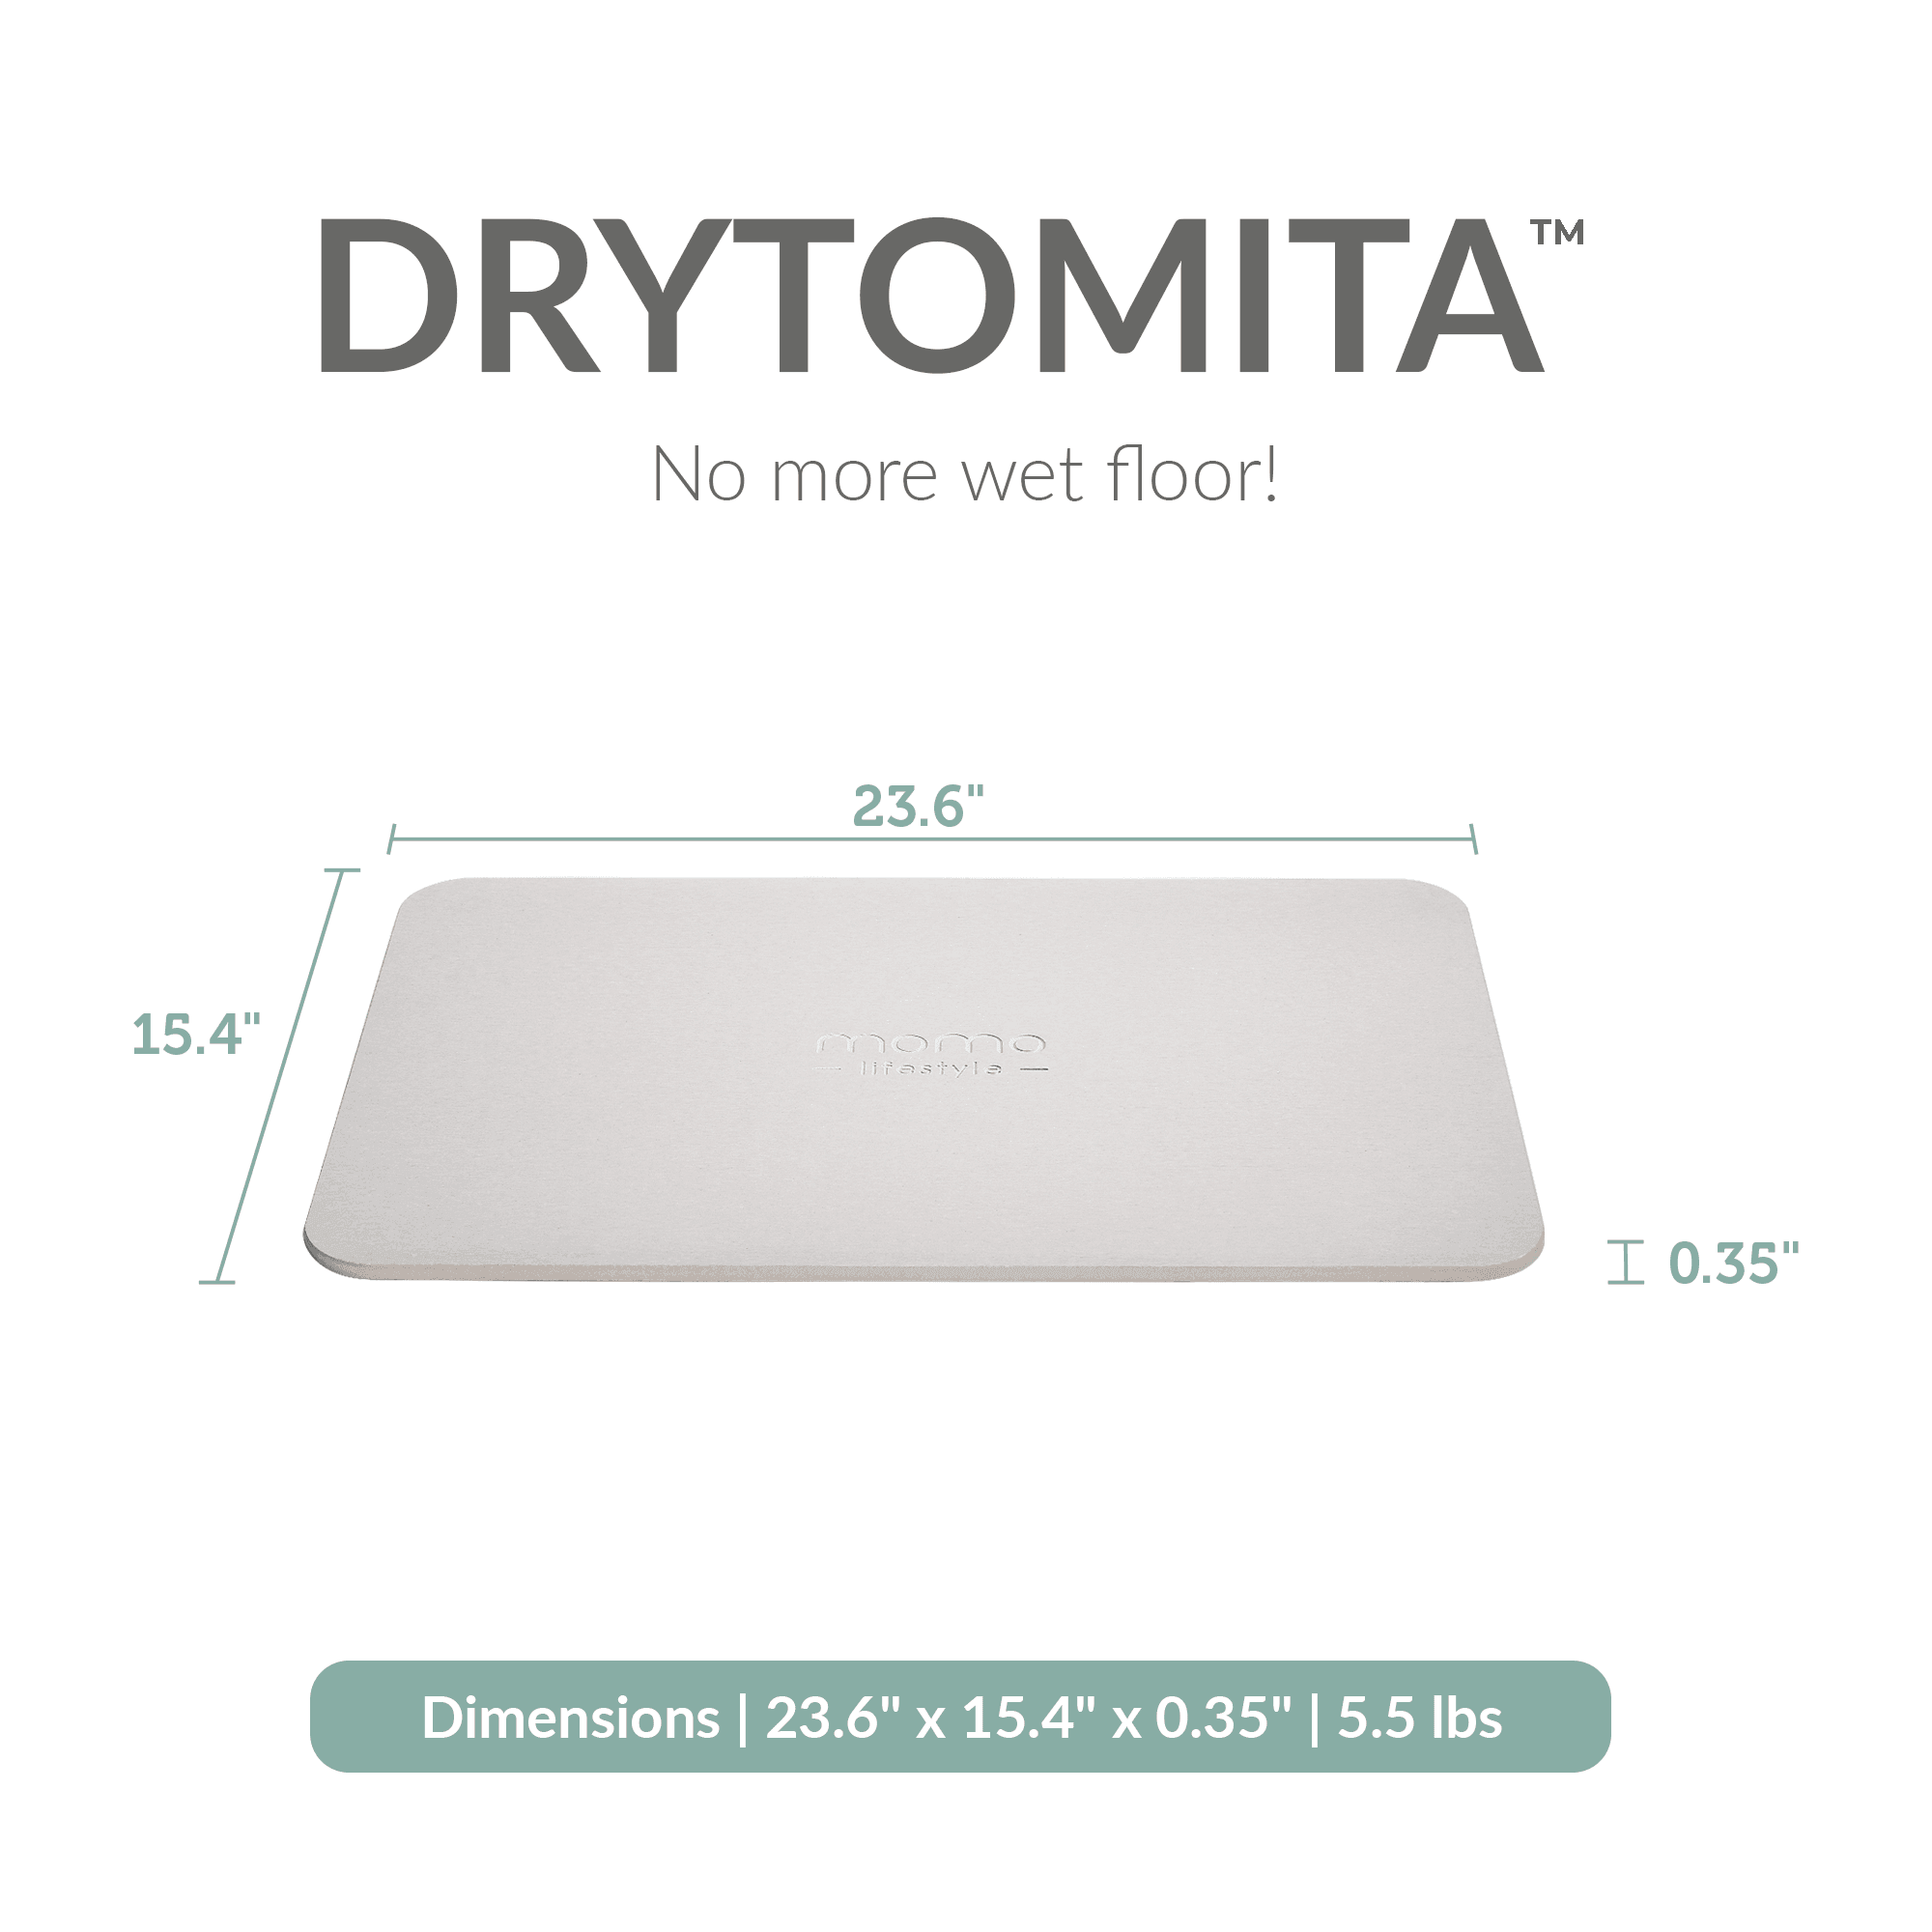 Momo Lifestyle Stone Bath Mat Drytomita Technology Diatomaceous Earth Bath Mat, Non-Slip Super Absorbent Quick Drying Shower Mat